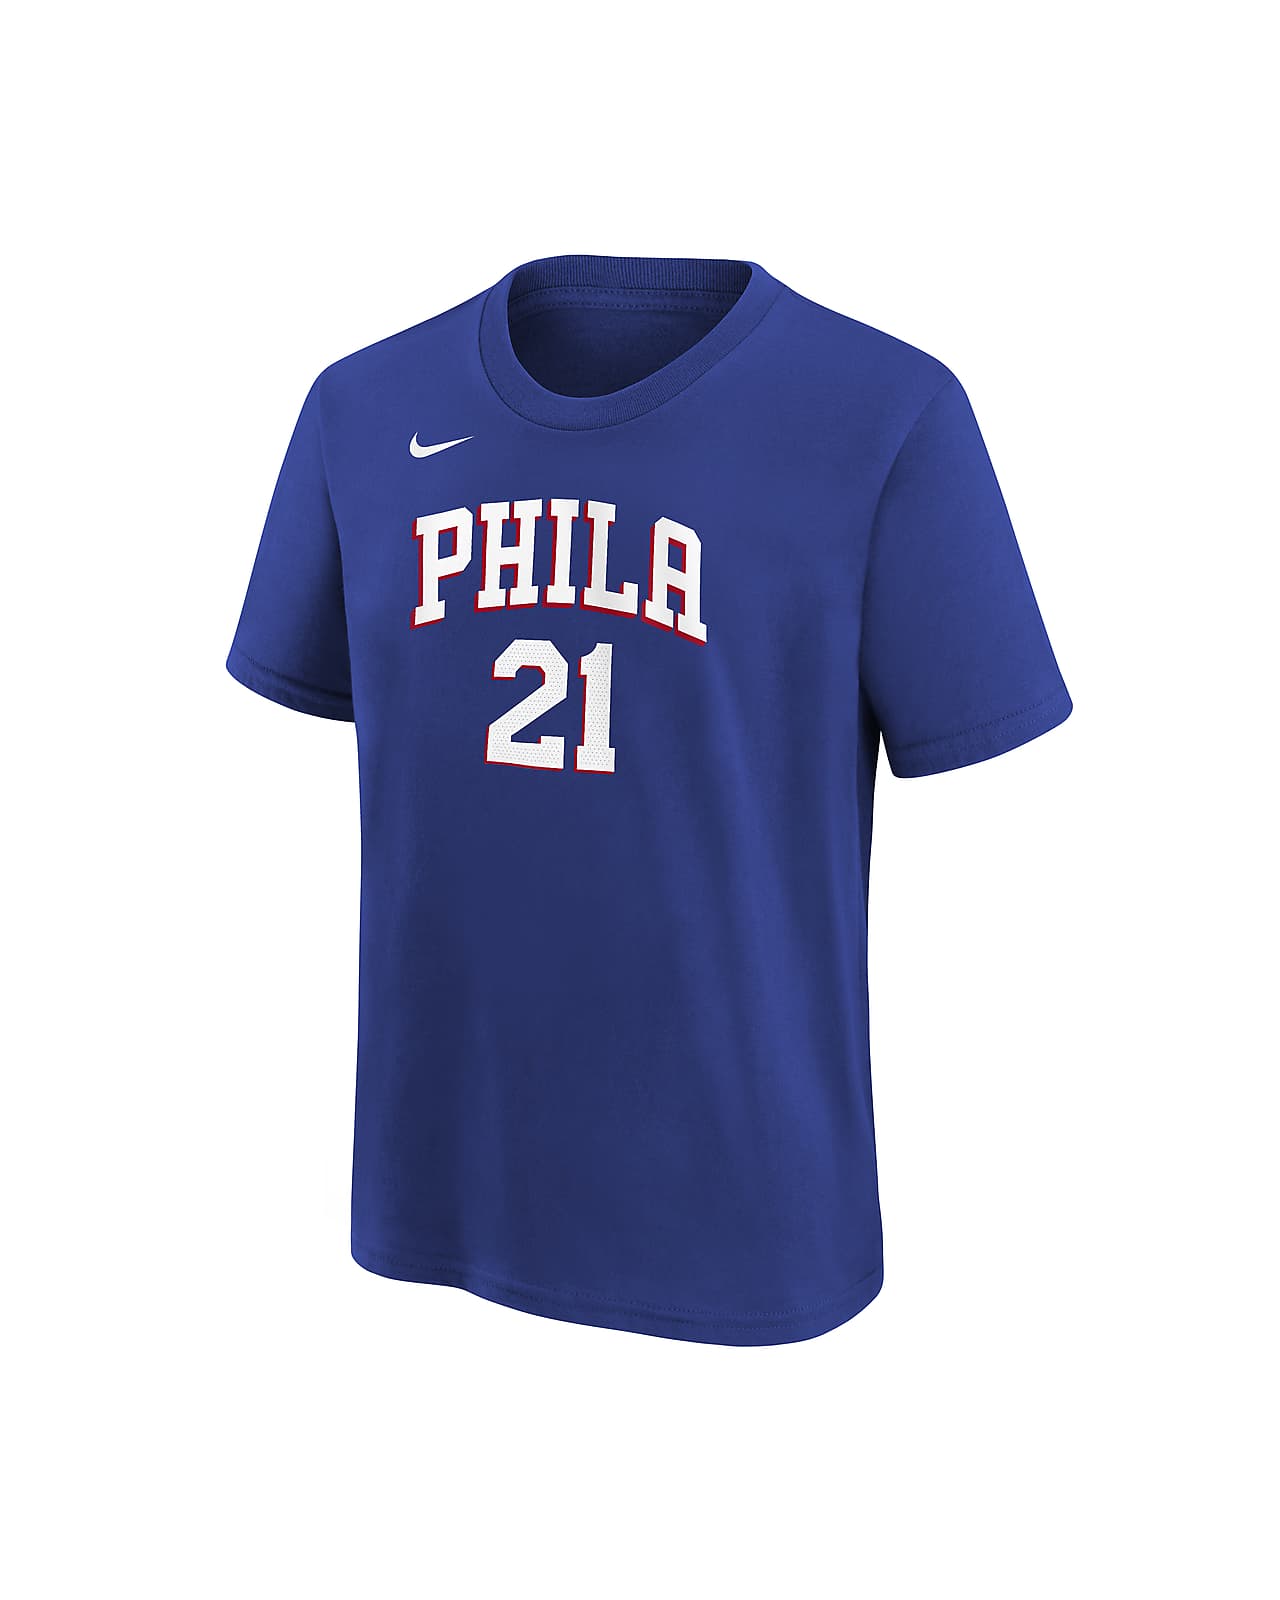 Joel Embiid Philadelphia 76ers Big Kids' (Boys') Nike NBA T-Shirt